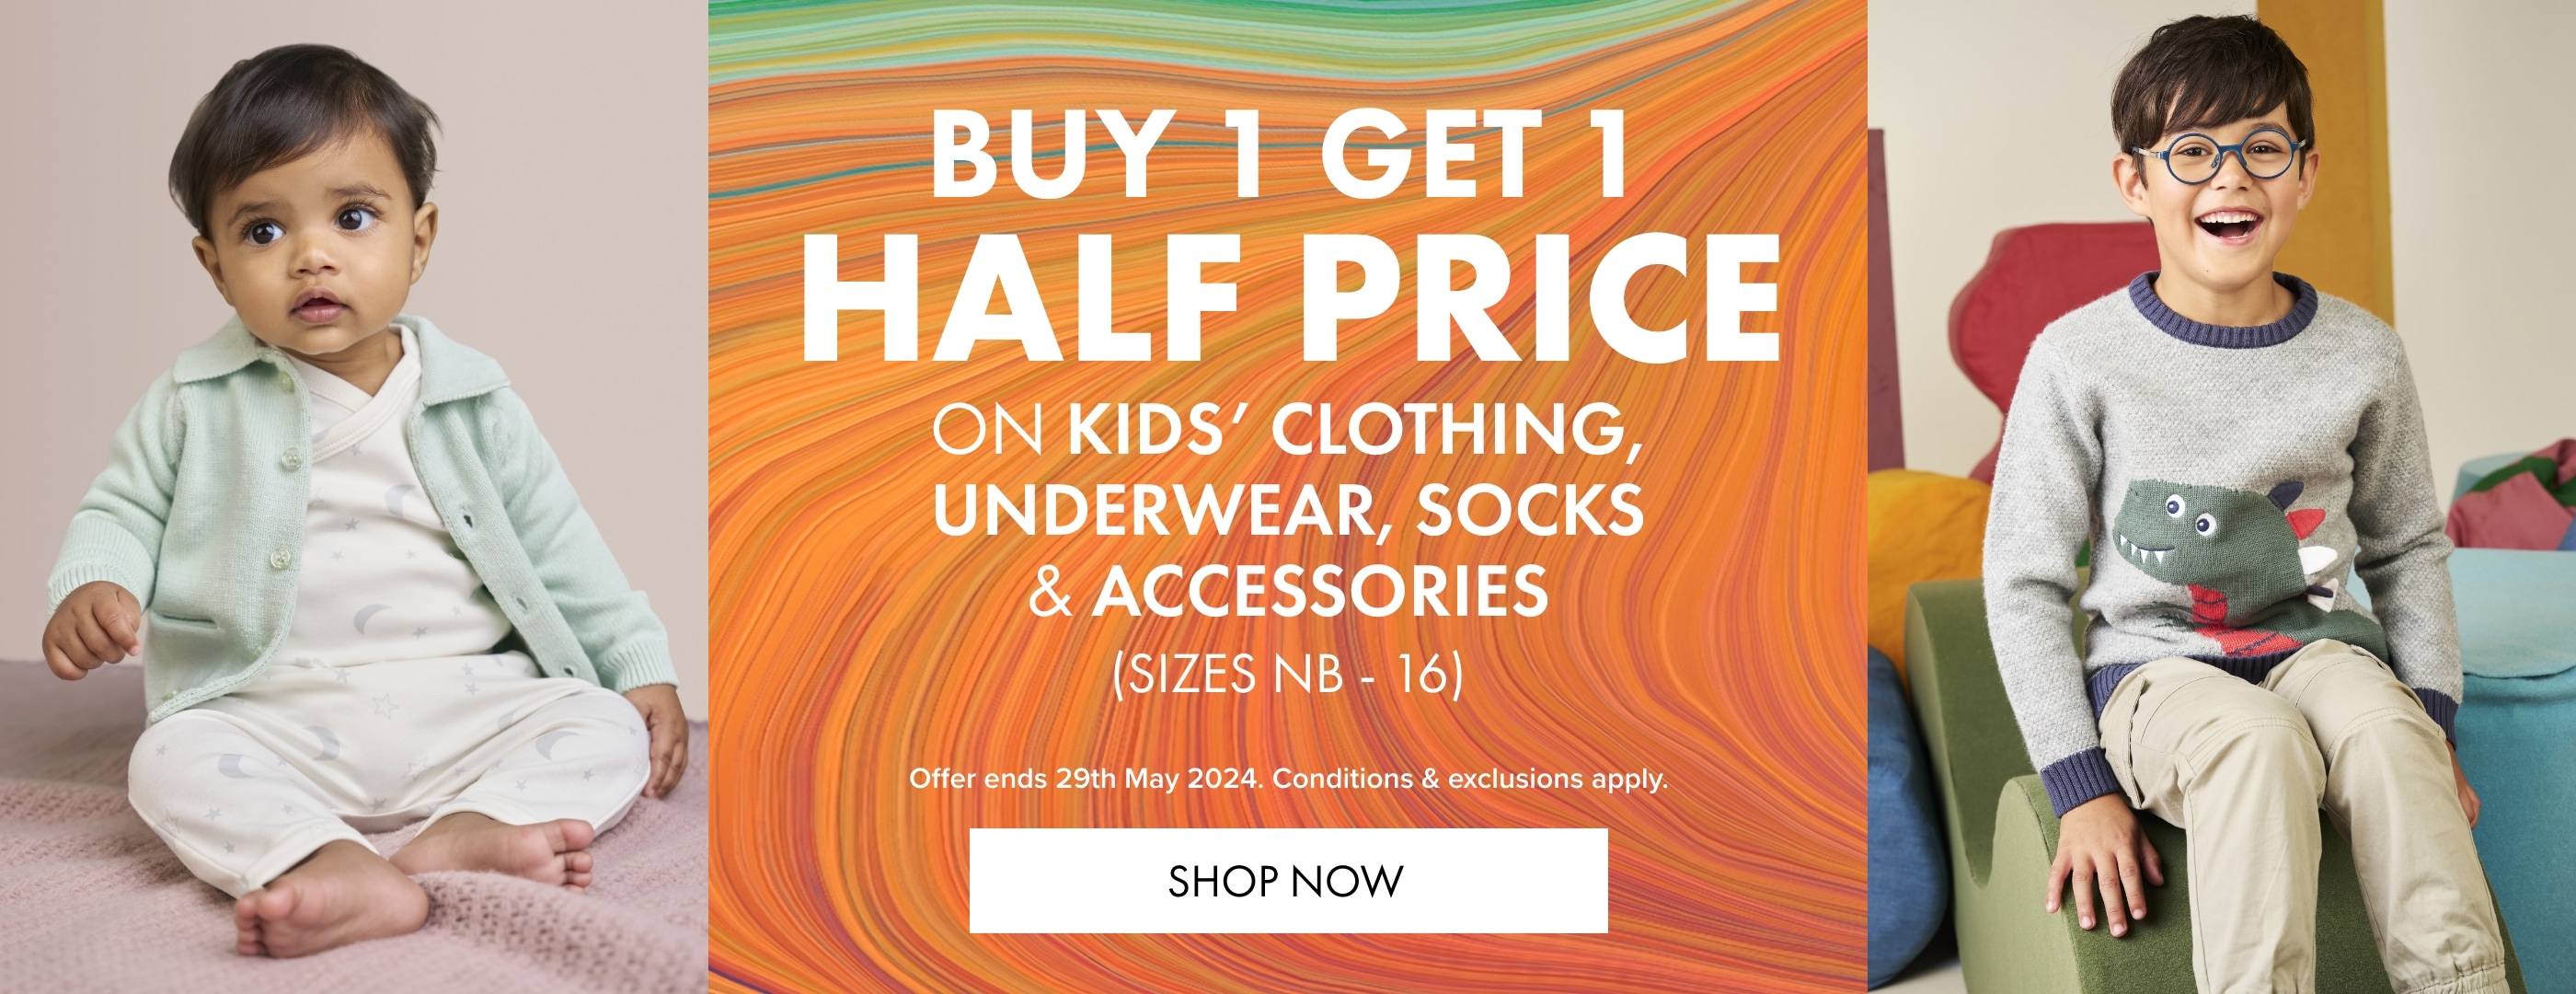 Buy 1 Get 1 Half Price on Kids' Clothing, Sleepwear, Underwear, Socks & Accessories. Sizes NB - 16